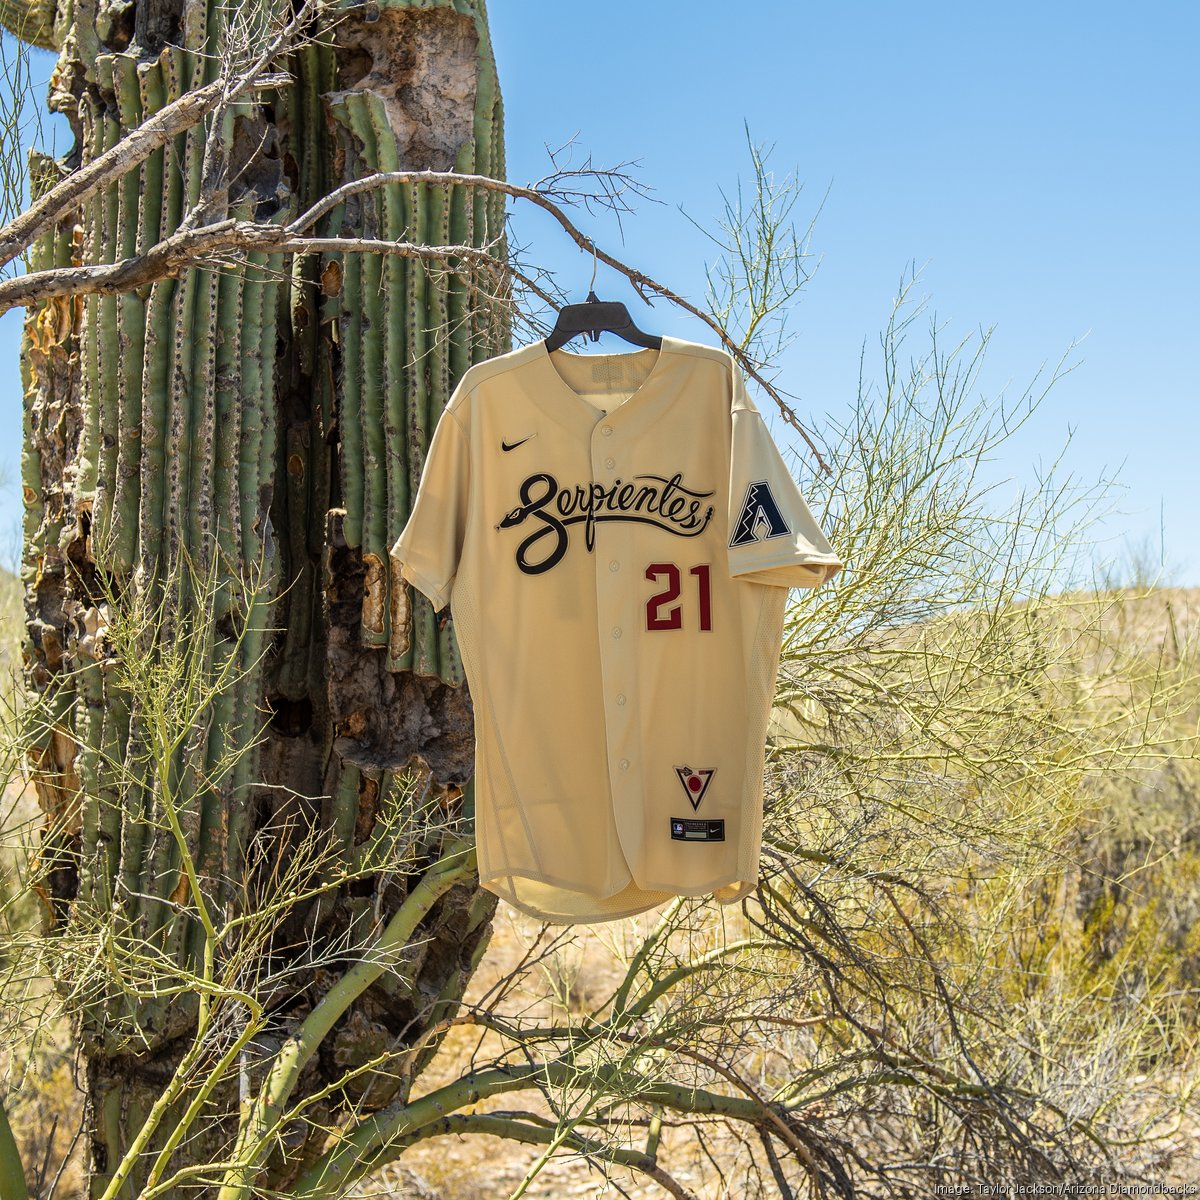 New Arizona Diamondbacks jersey embodies Arizona culture and people -  Phoenix Business Journal